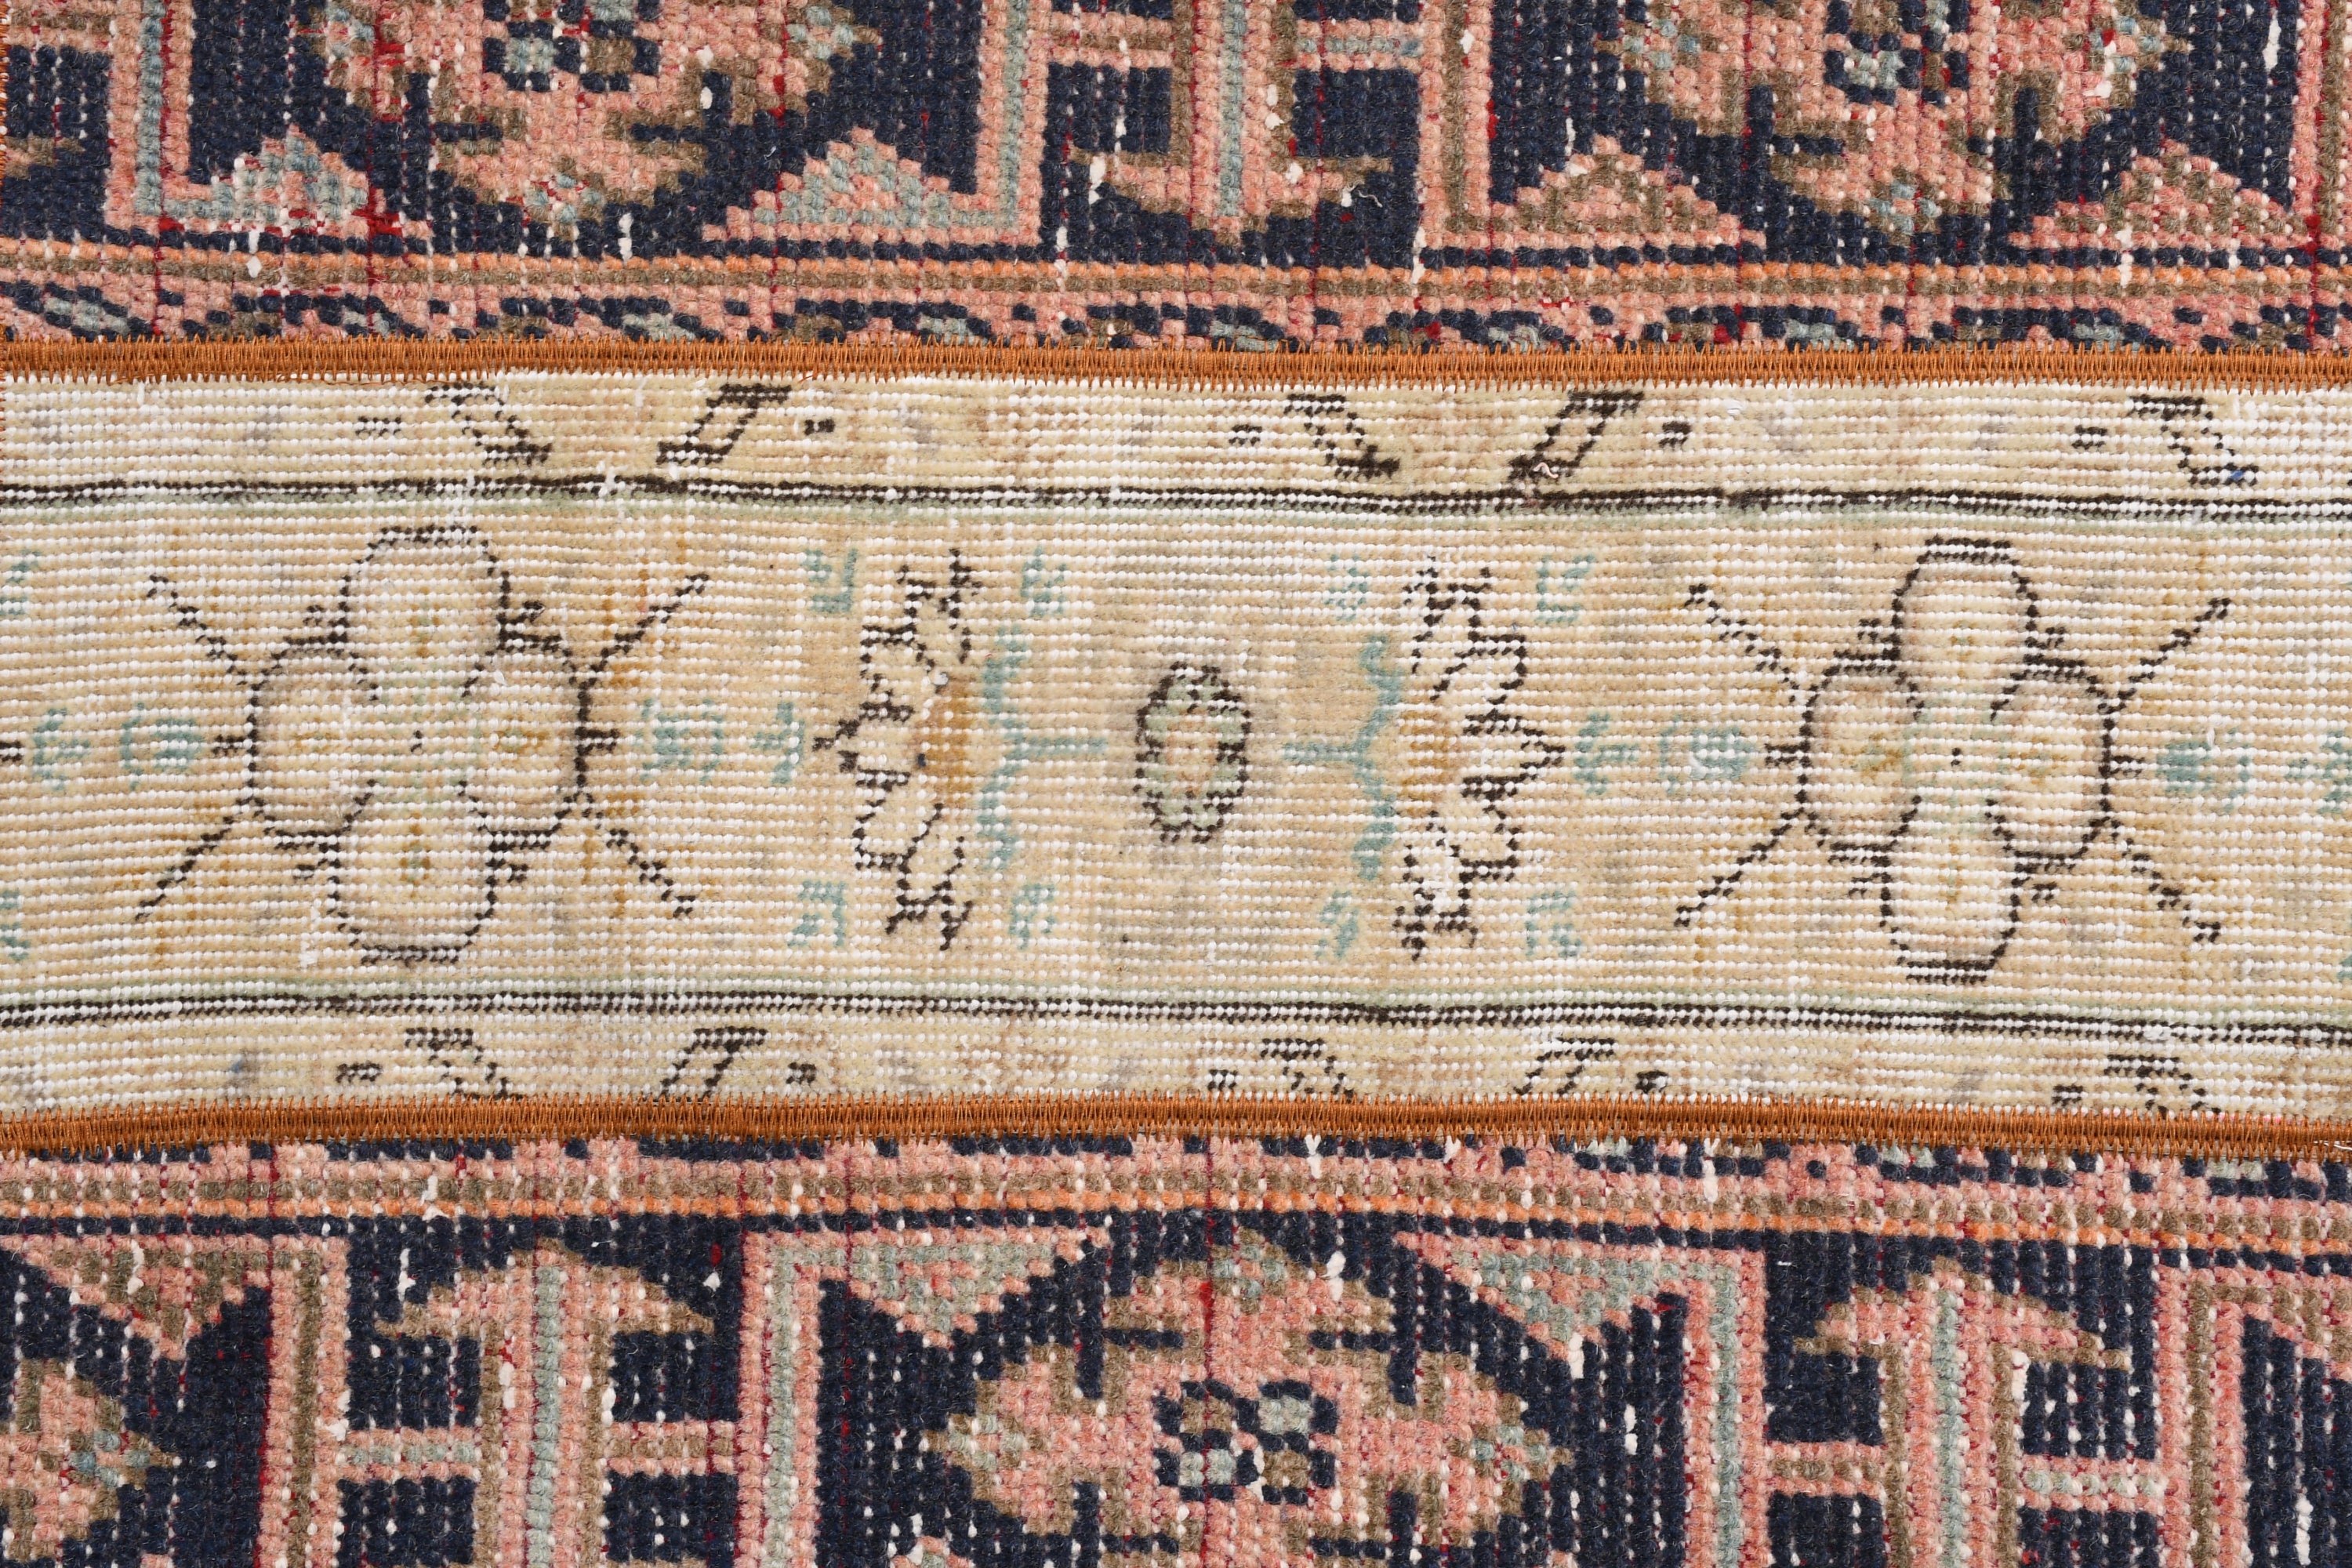 Antique Rug, Vintage Rug, Beige Anatolian Rug, Rugs for Door Mat, Bath Rug, Nursery Rugs, Turkish Rug, 1.9x3.7 ft Small Rugs, Wool Rug